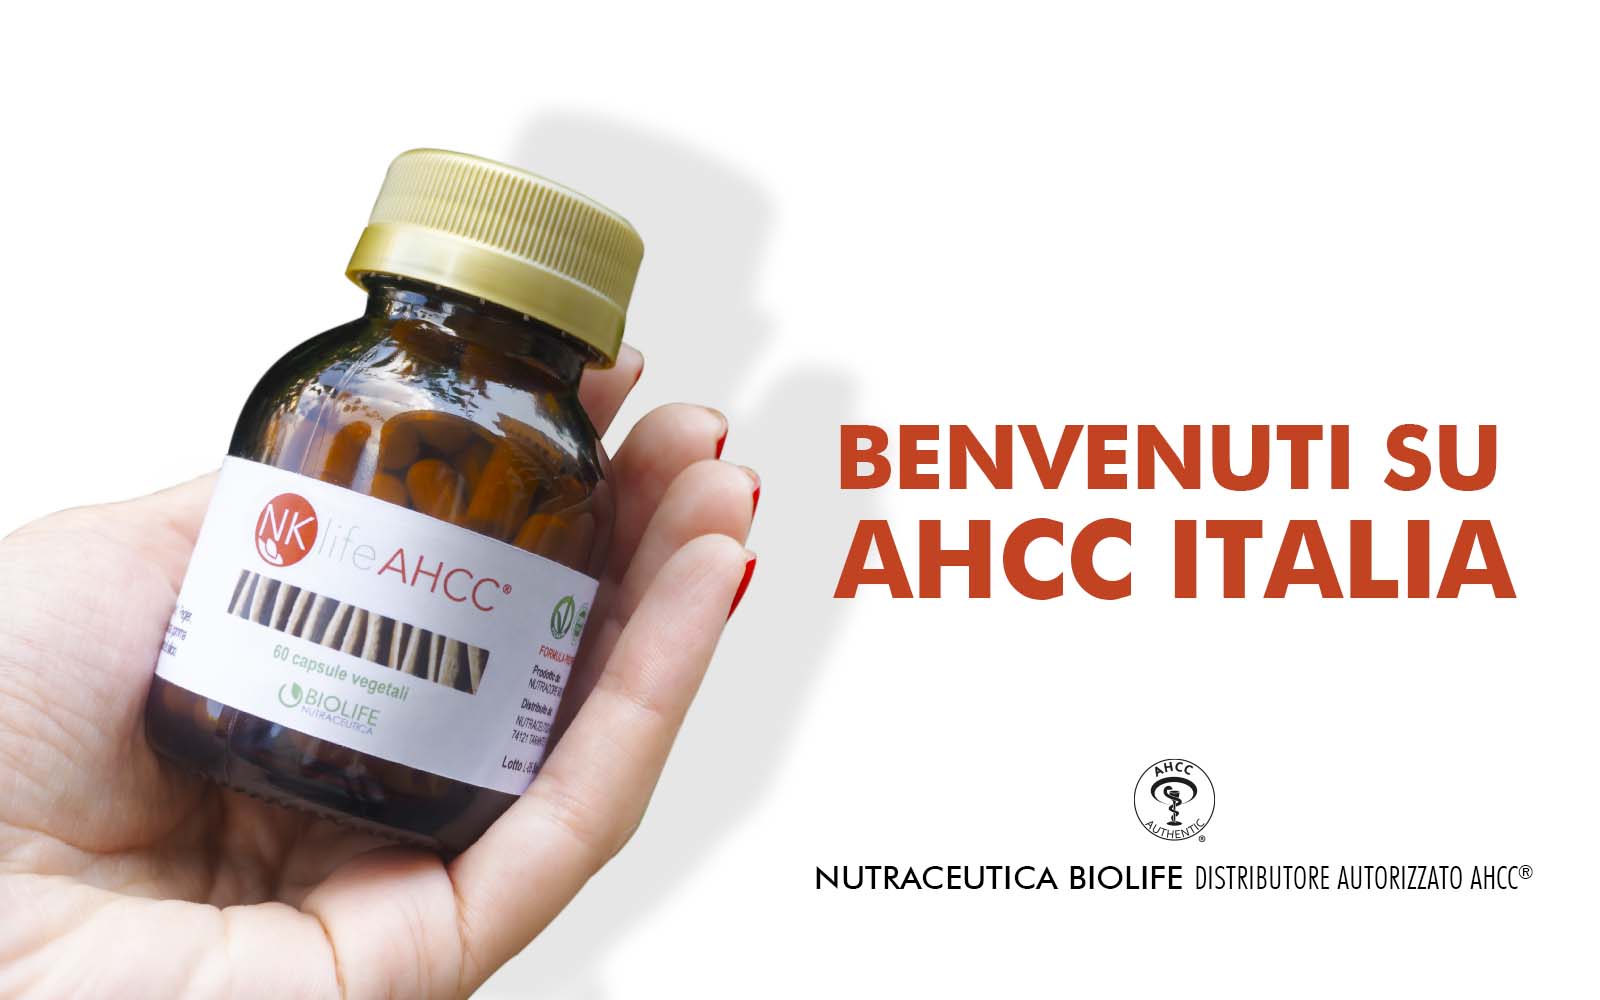 AHCC_capsule_italia_nutraceutica_biolife_hpv_papilloma_virus_nklife_shiitake